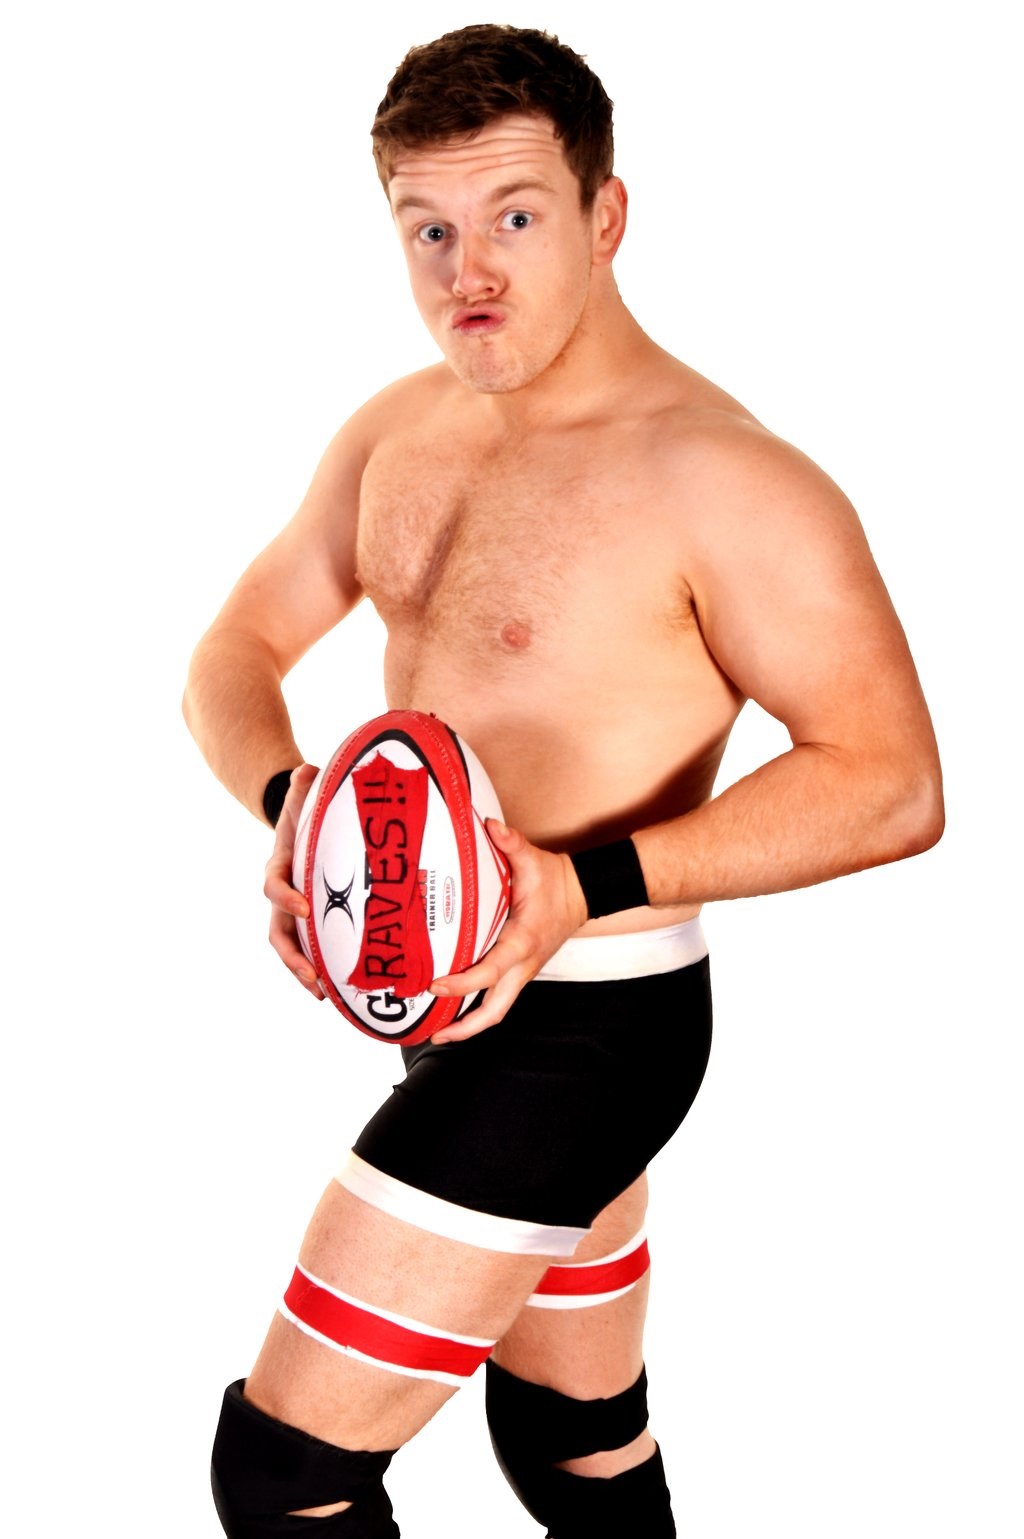 'The 80 Minute Man' David Graves - Wrestler profile image